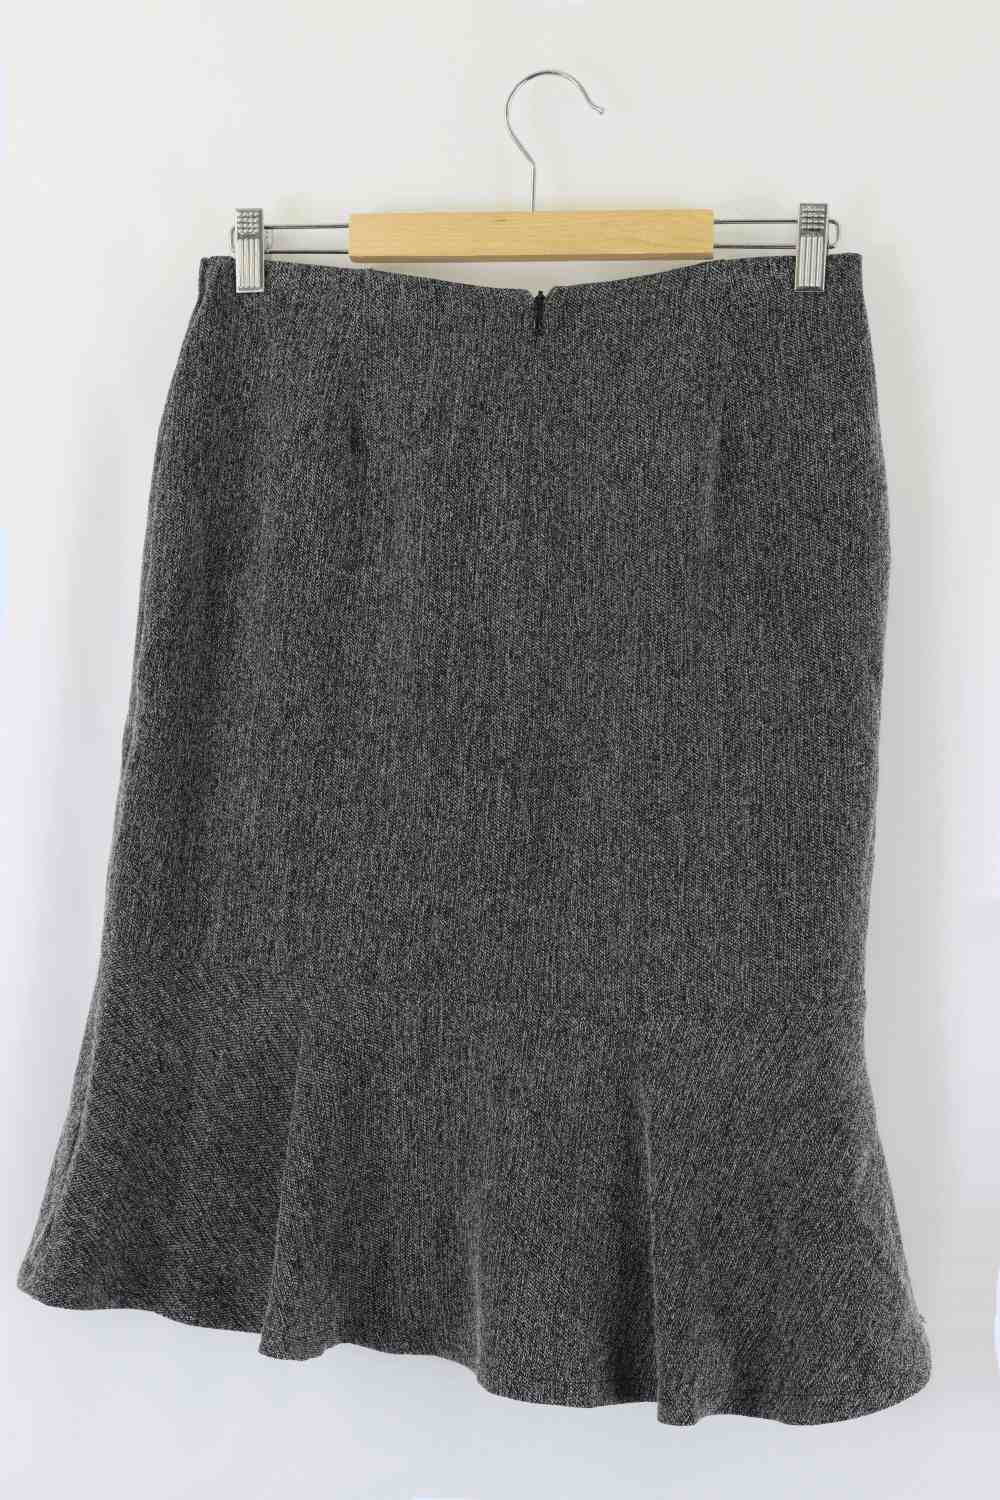 Jacqui E Charcoal Skirt 10